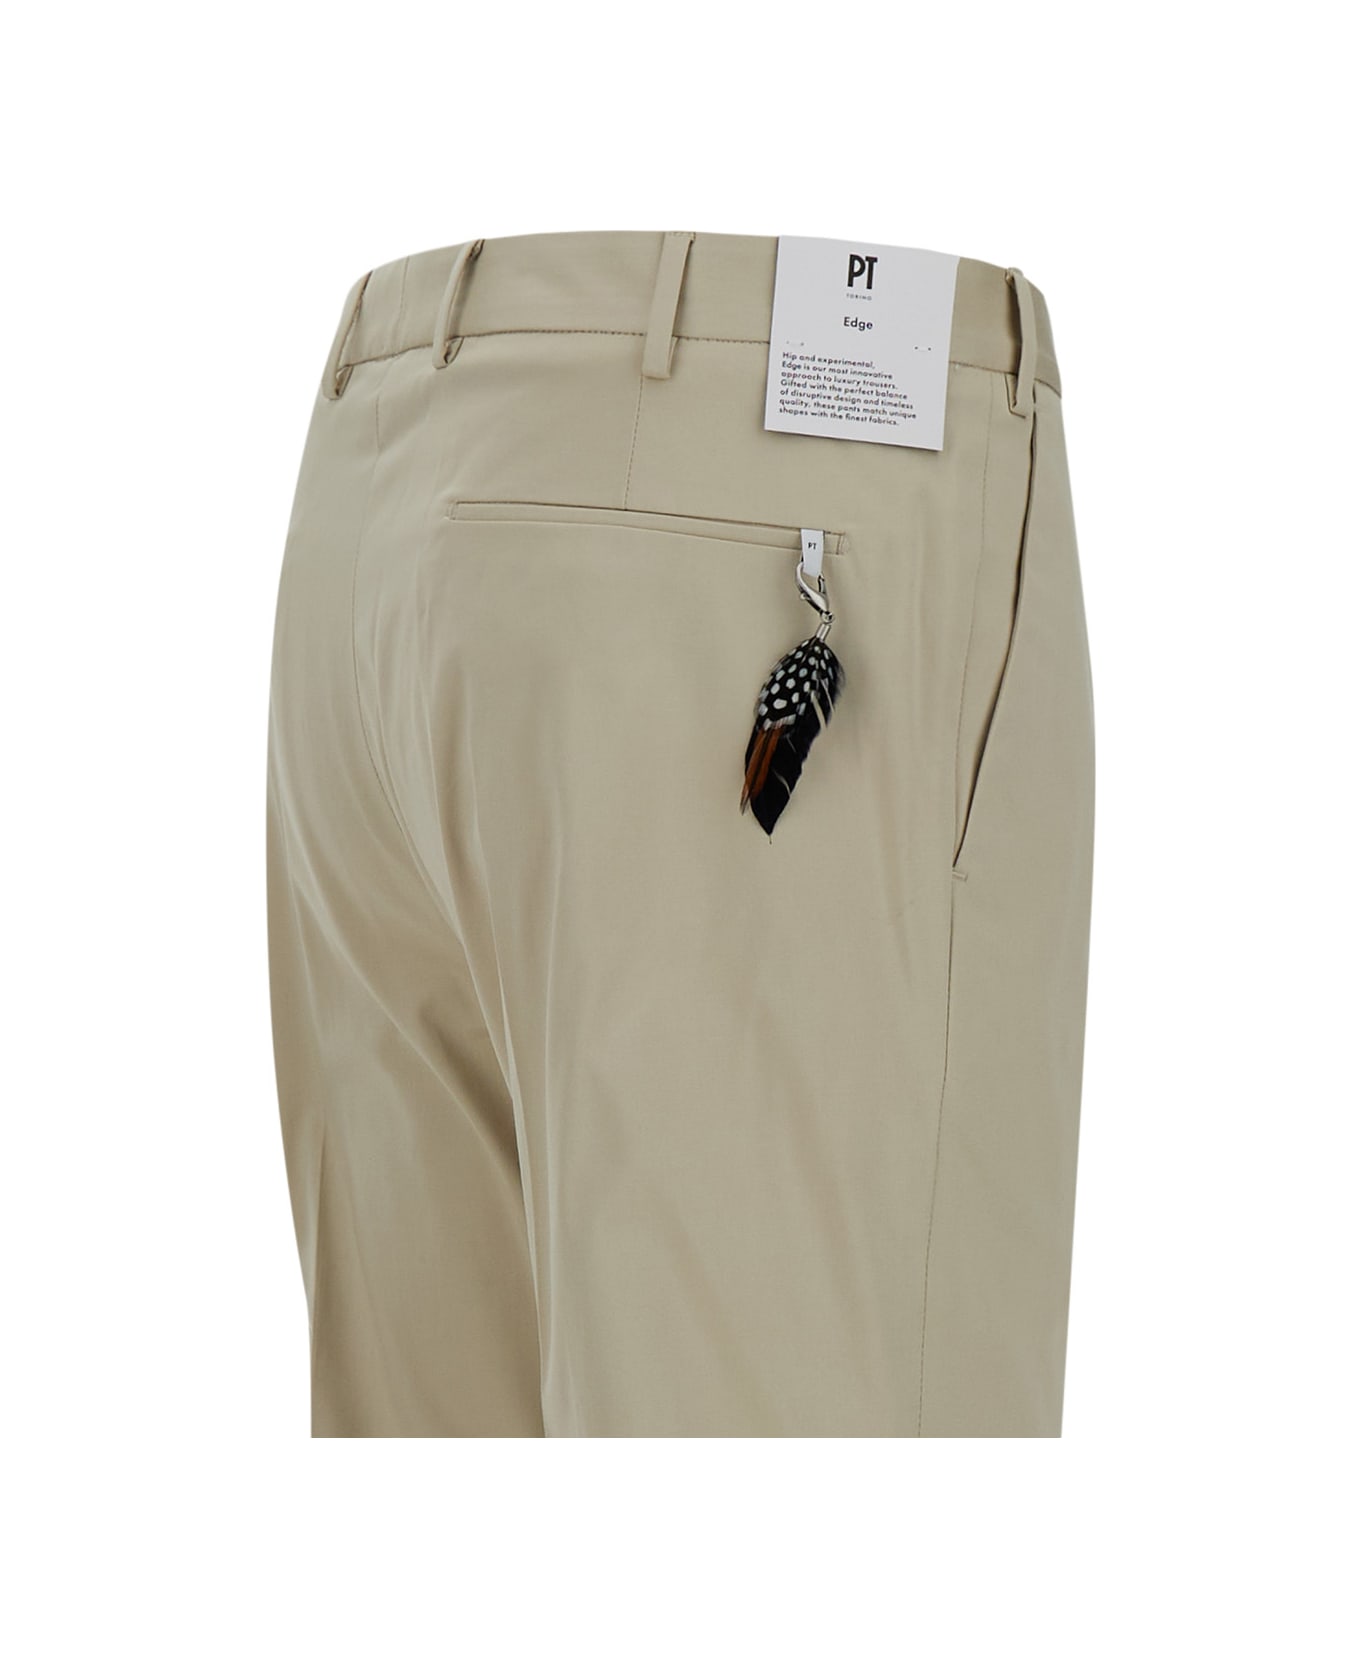 PT01 Beige Slim Fit Trousers In Cotton Blend Man - Beige